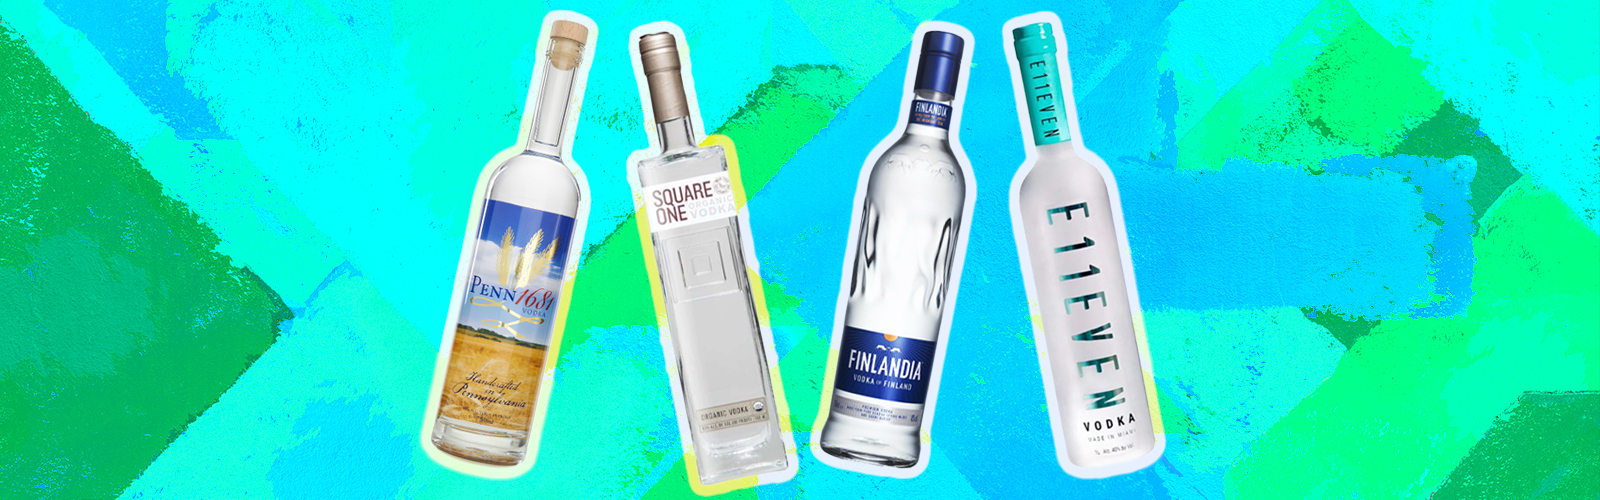 10 Best Vodka Brands in the World – Crystal Decor